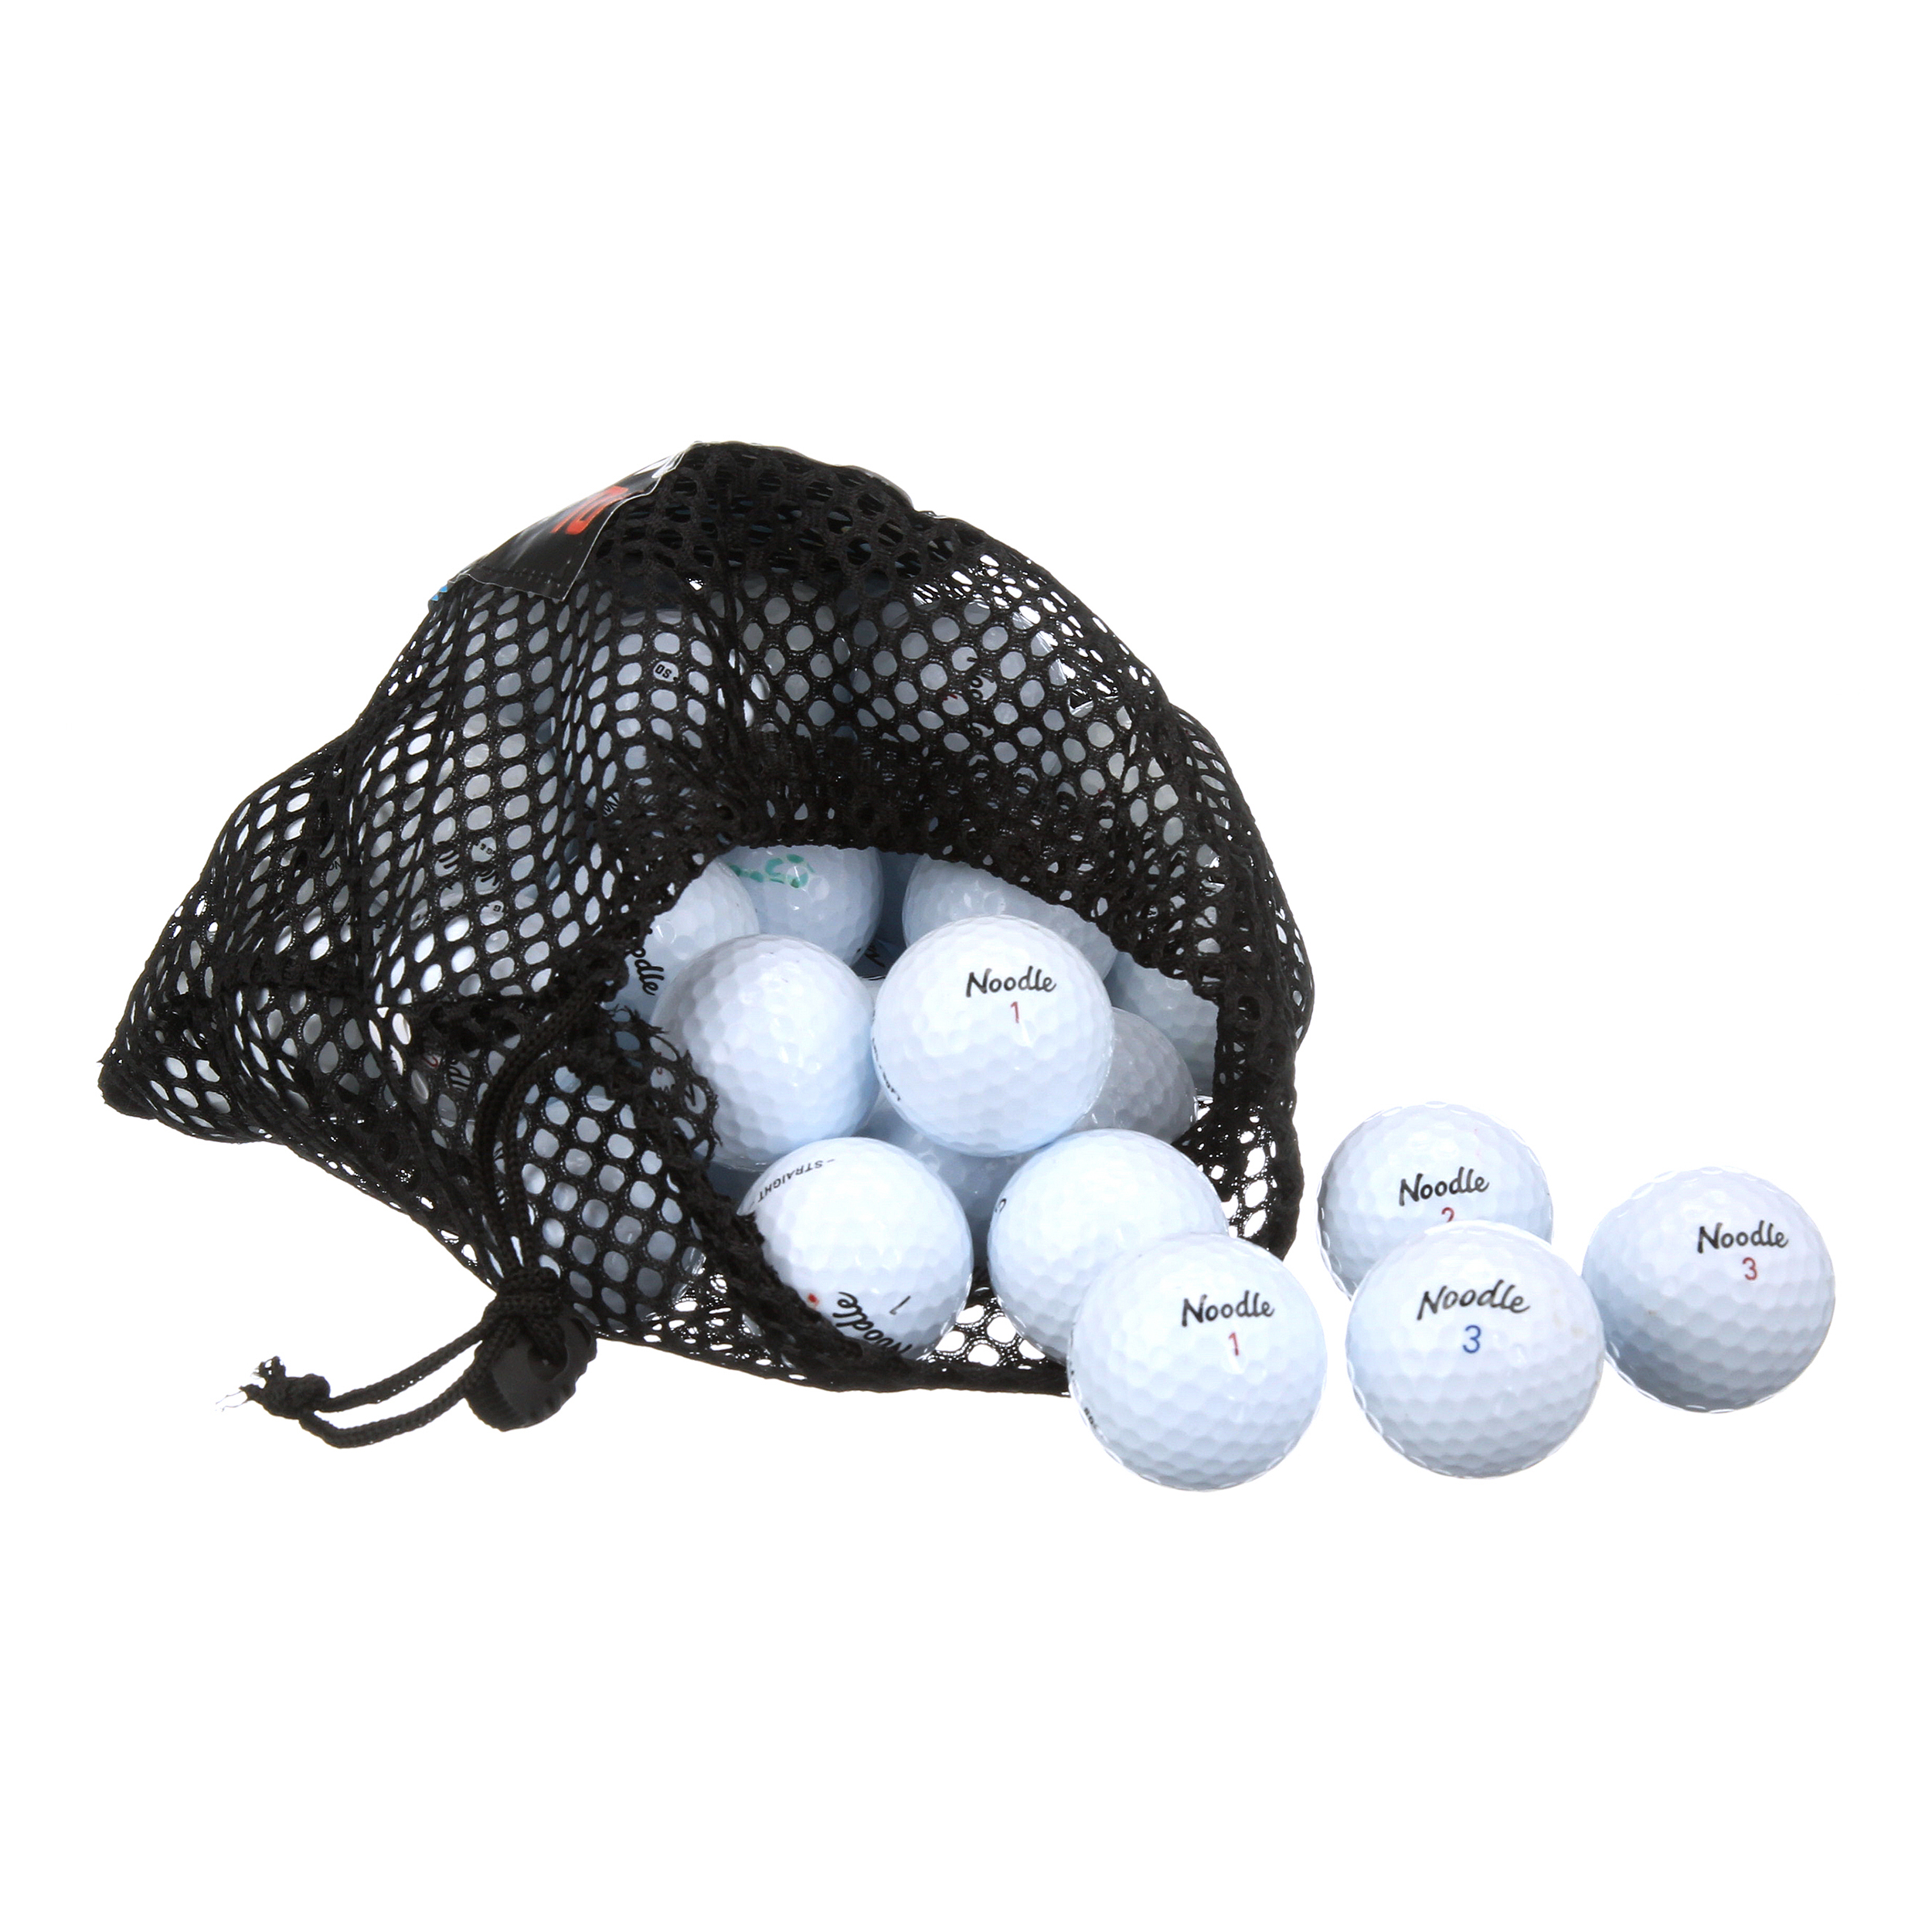 Maxfli Golf Balls, Used, 48 Pack - image 5 of 5